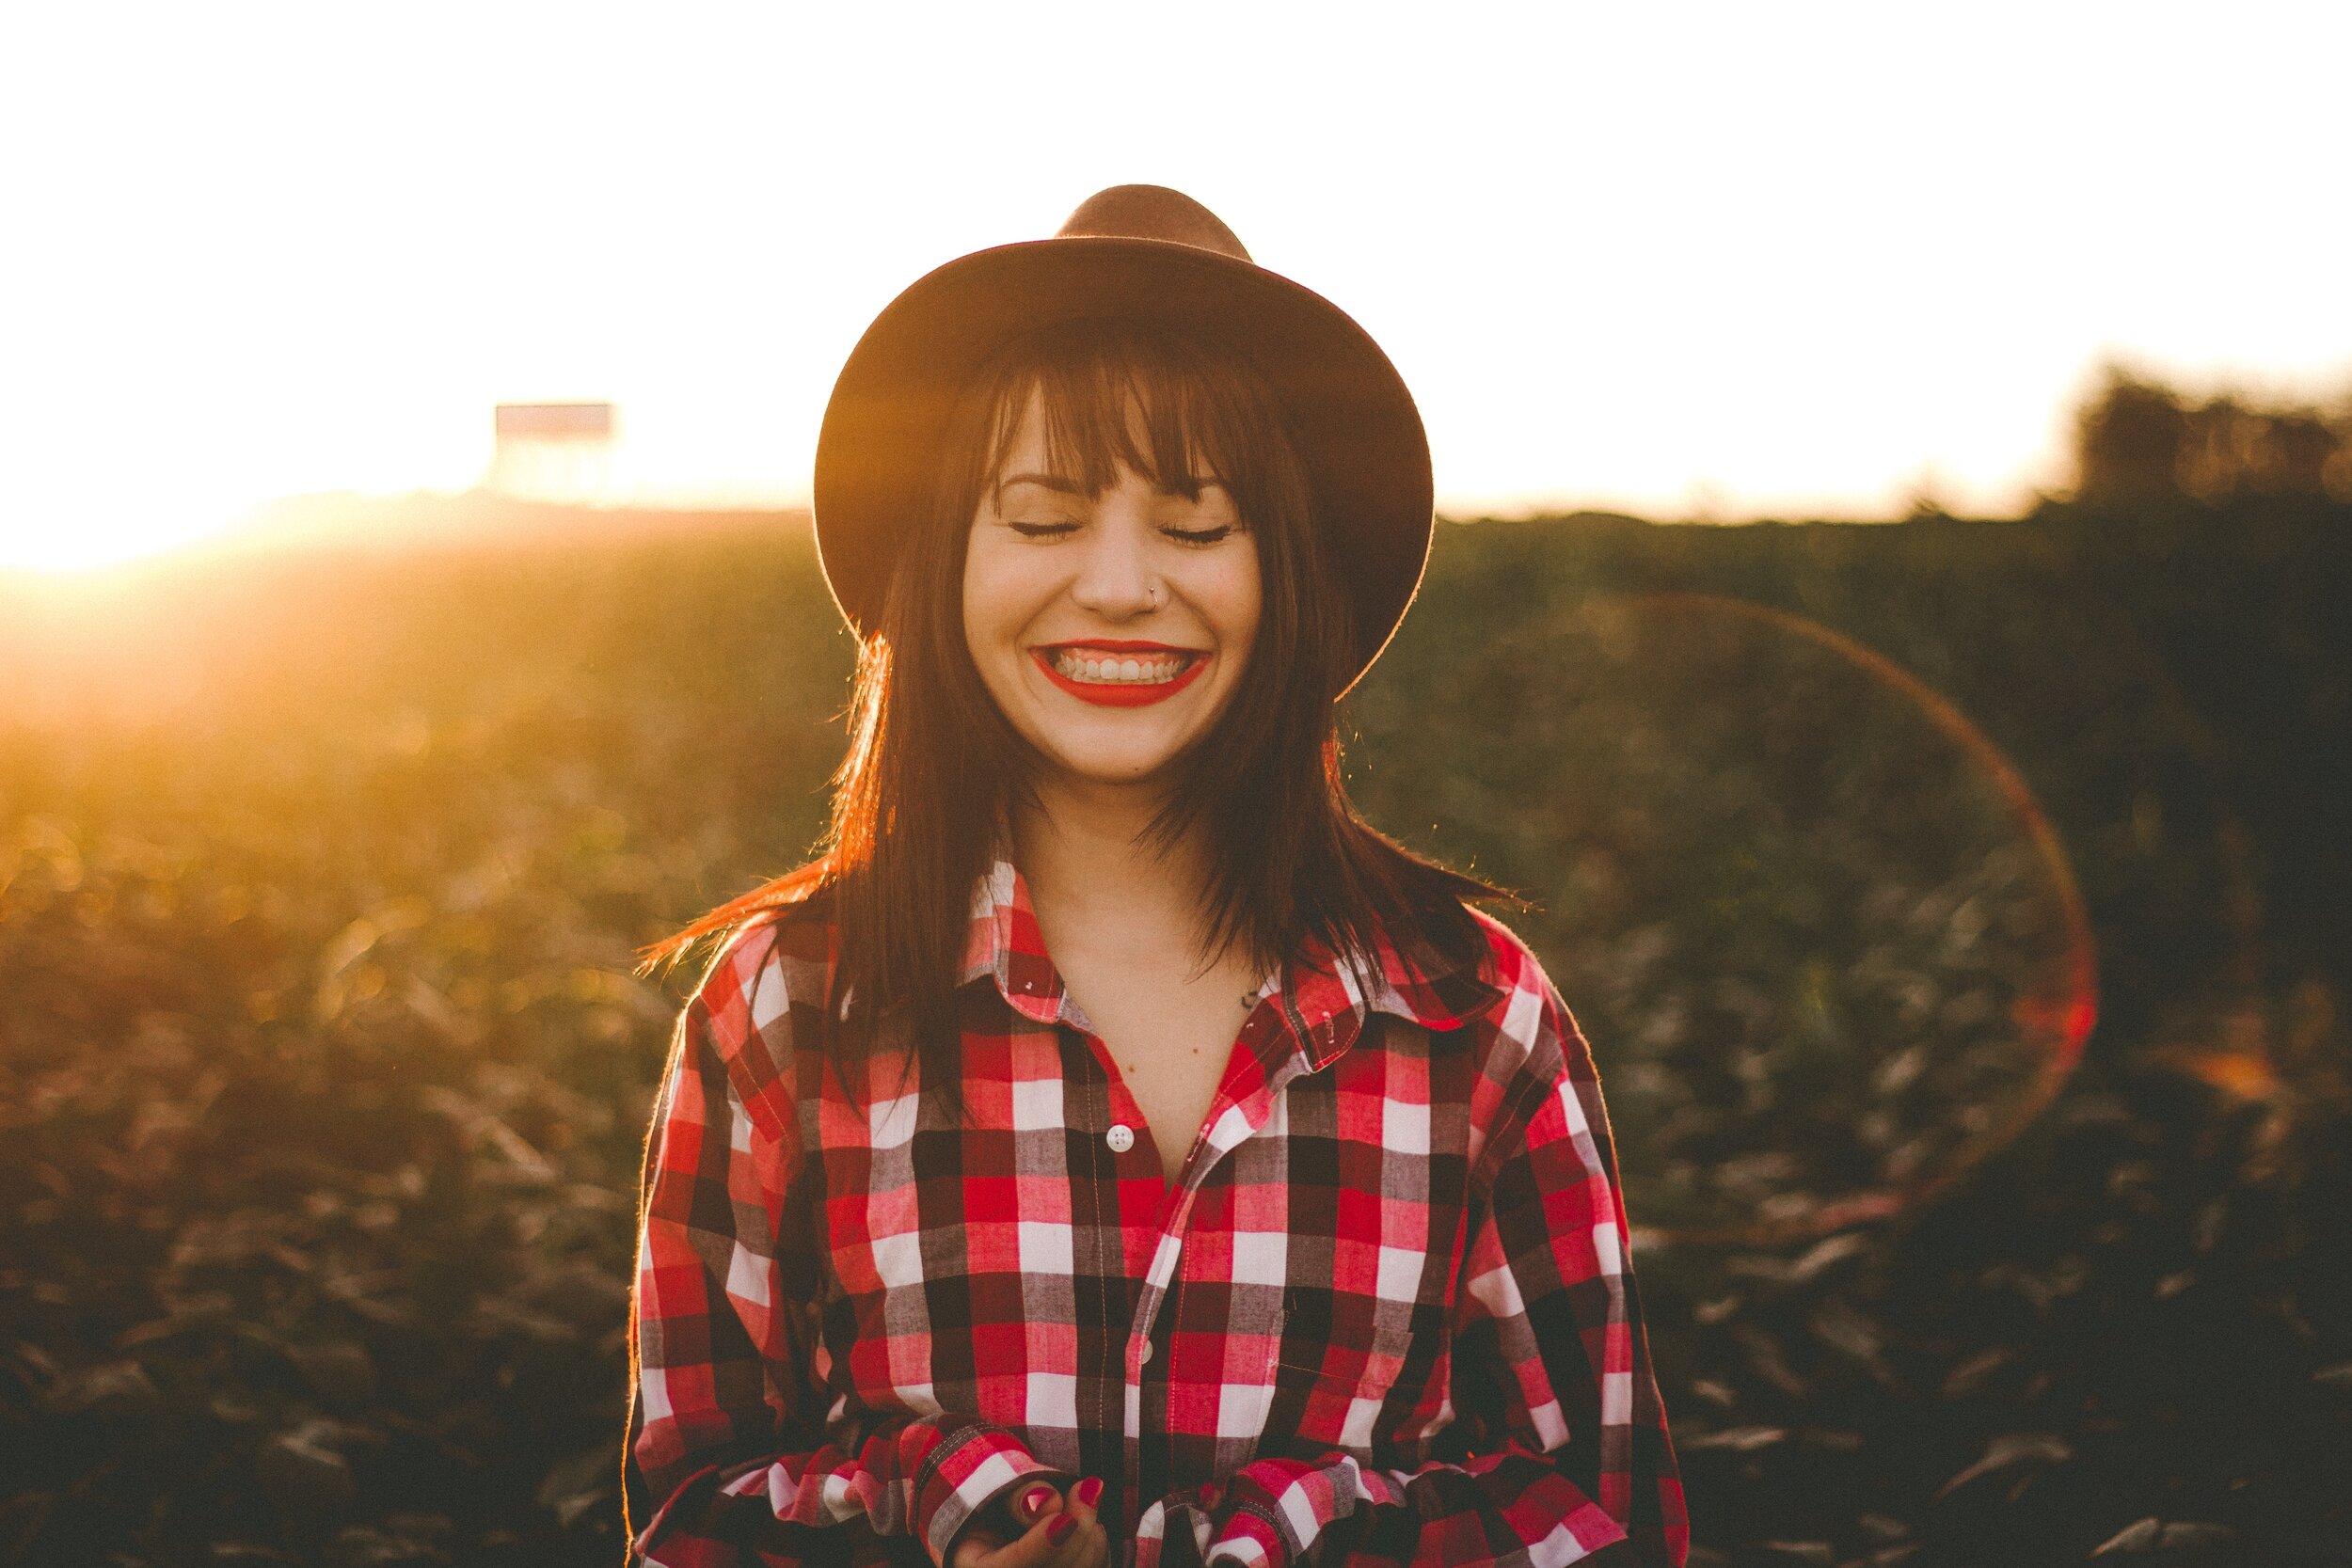 young woman smiling in field allef-vinicius-180699-unsplash.jpg